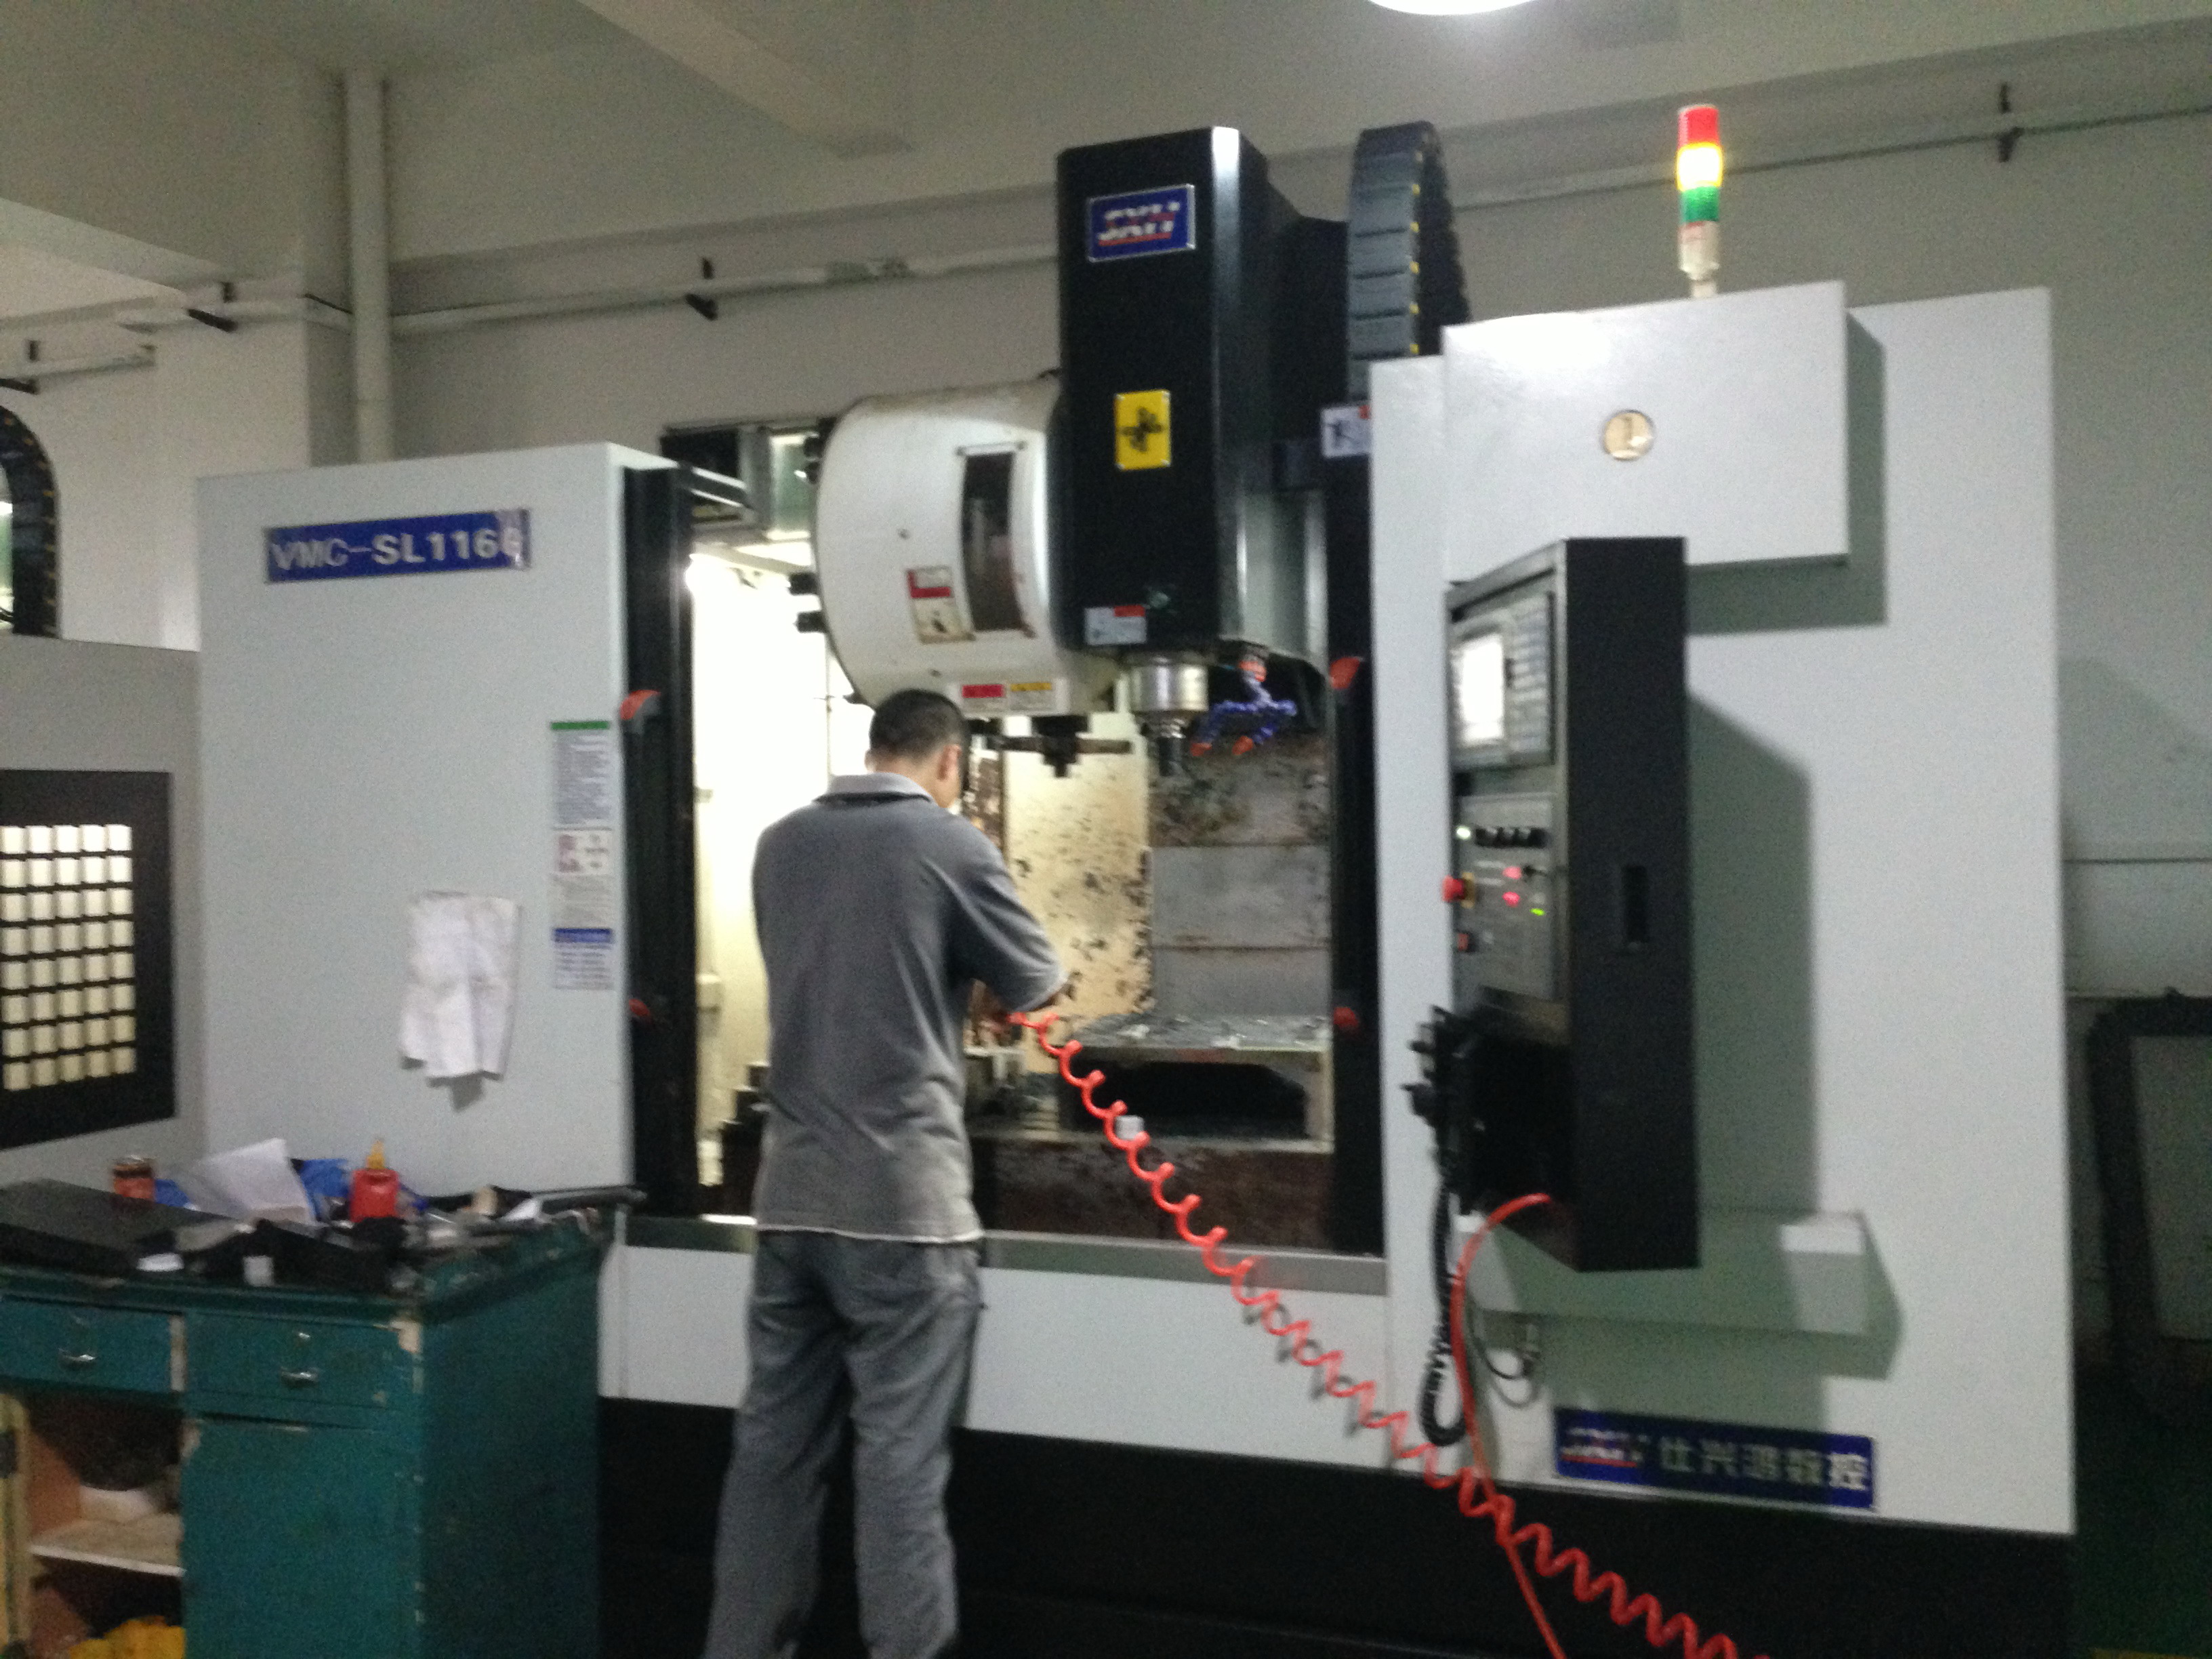 CNC maching workshop